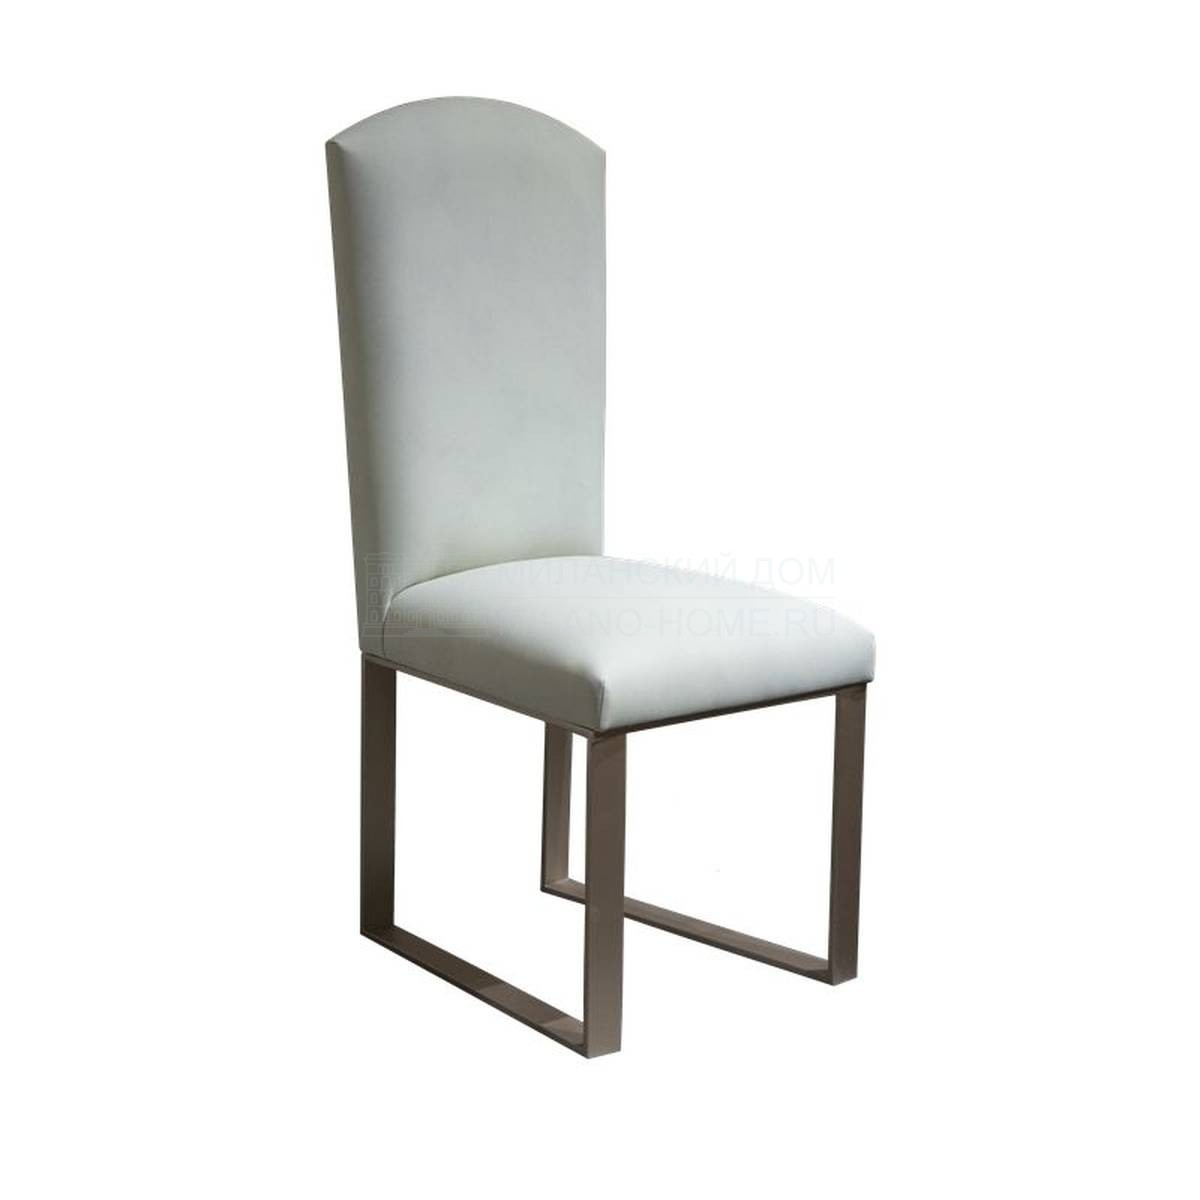 Кожаный стул H-3077 chair из Испании фабрики GUADARTE